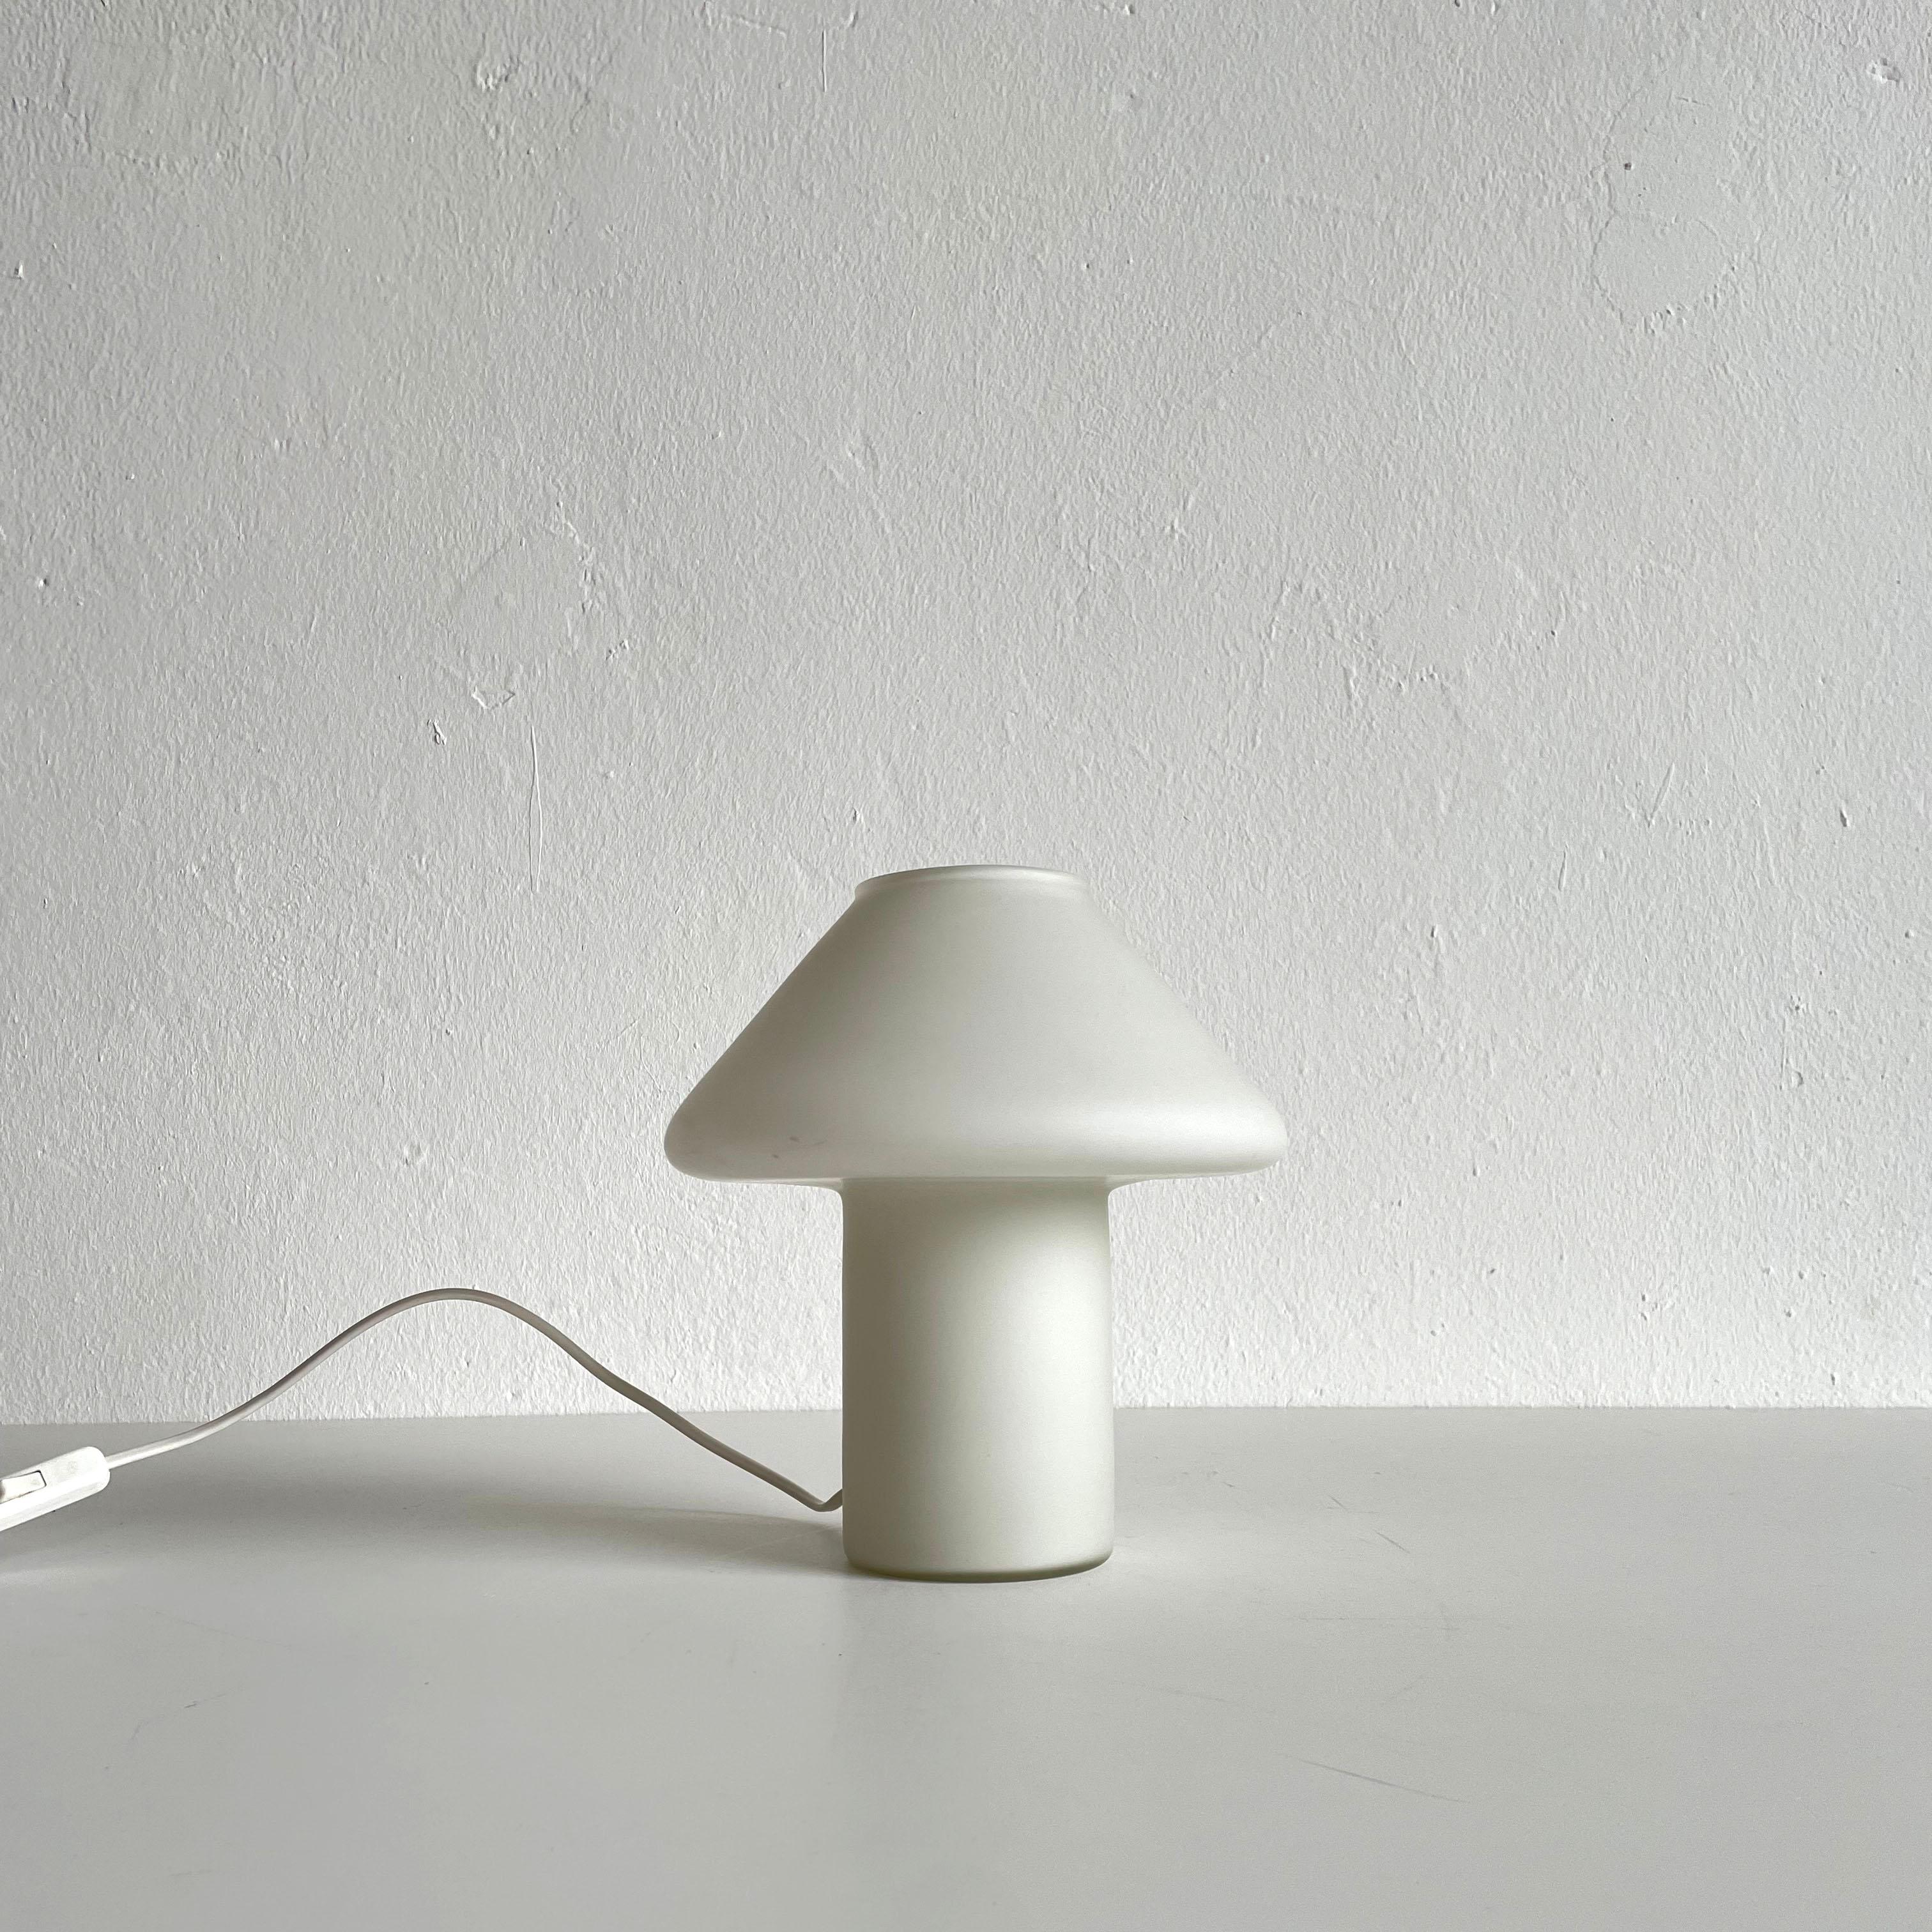 Late 20th Century Hala Zeist White Satin Glass Mushroom Table Lamp, Netherlands, 1970s-1980s For Sale